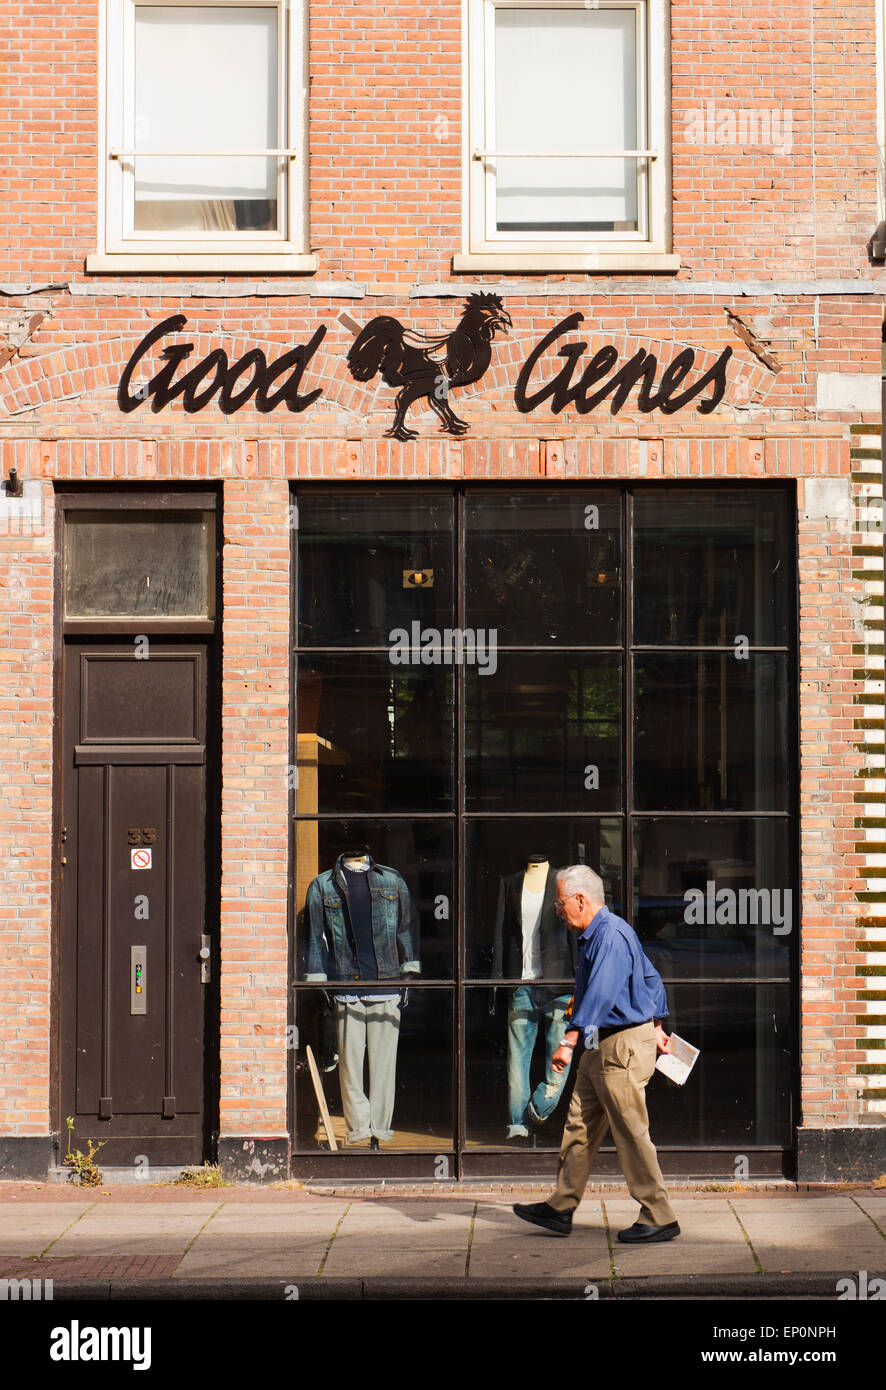 Elderly man walks past a men's clothing store called Good Genes. Stock Photo